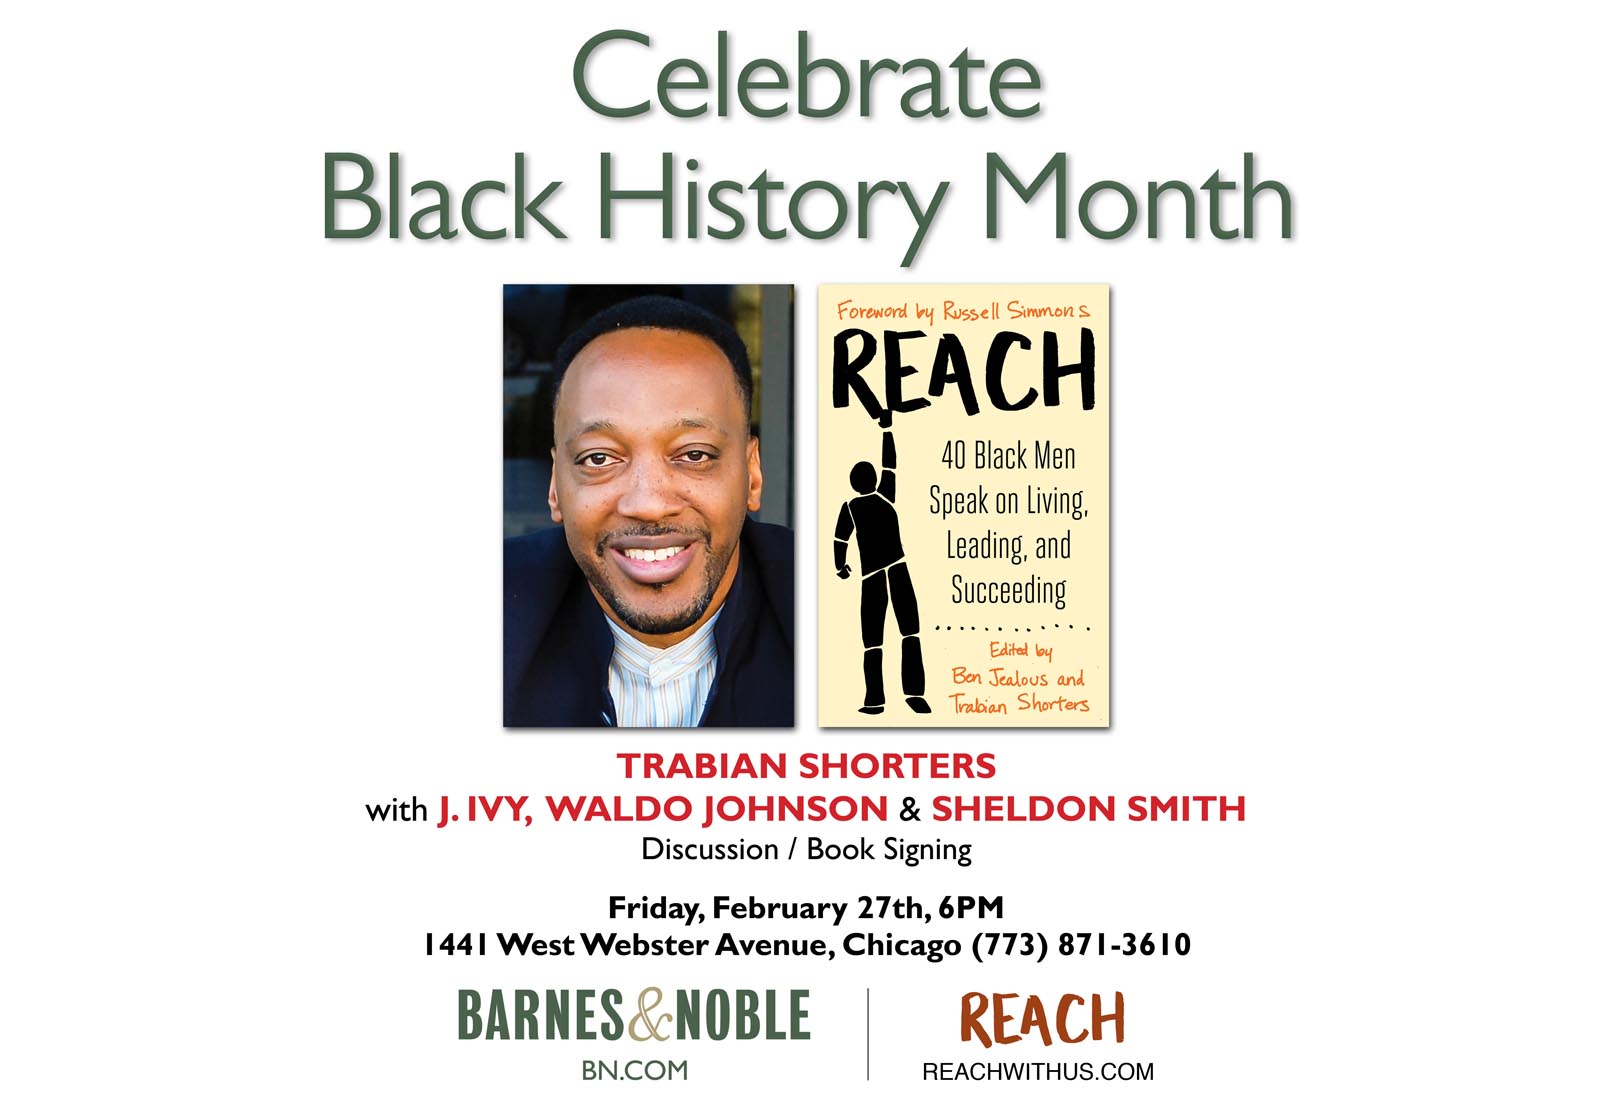 Celebrate Black History Month: Chicago